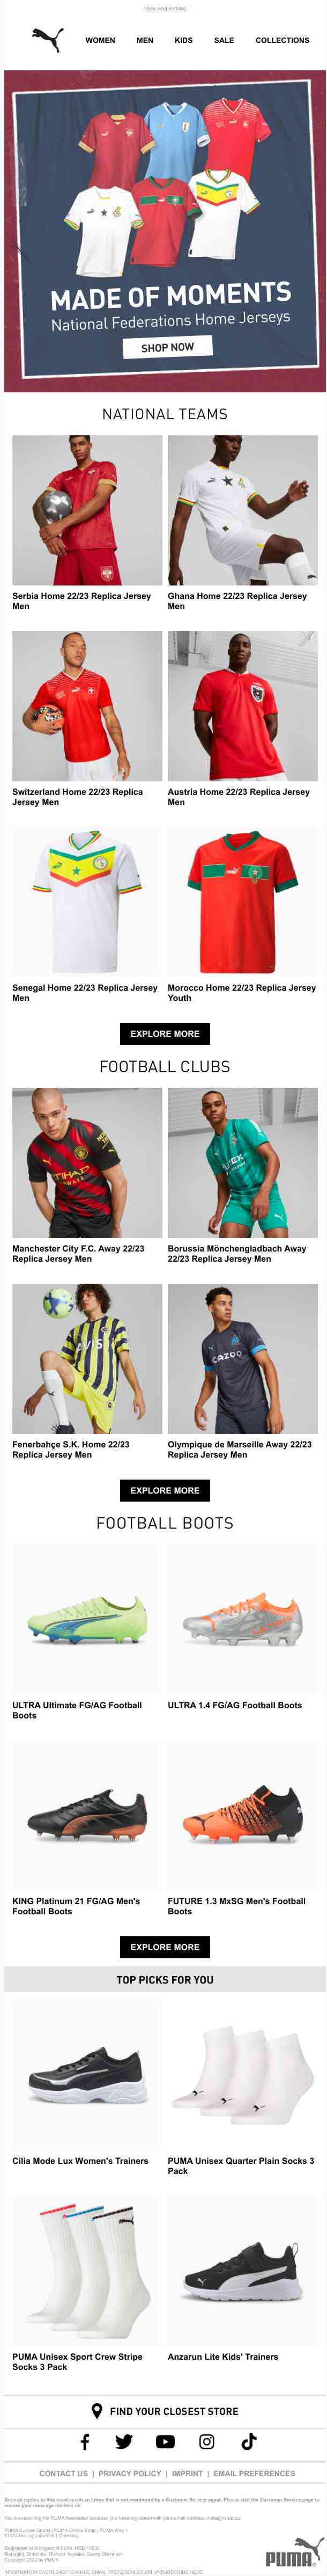 Football Fans - New PUMA Kits Have Landed